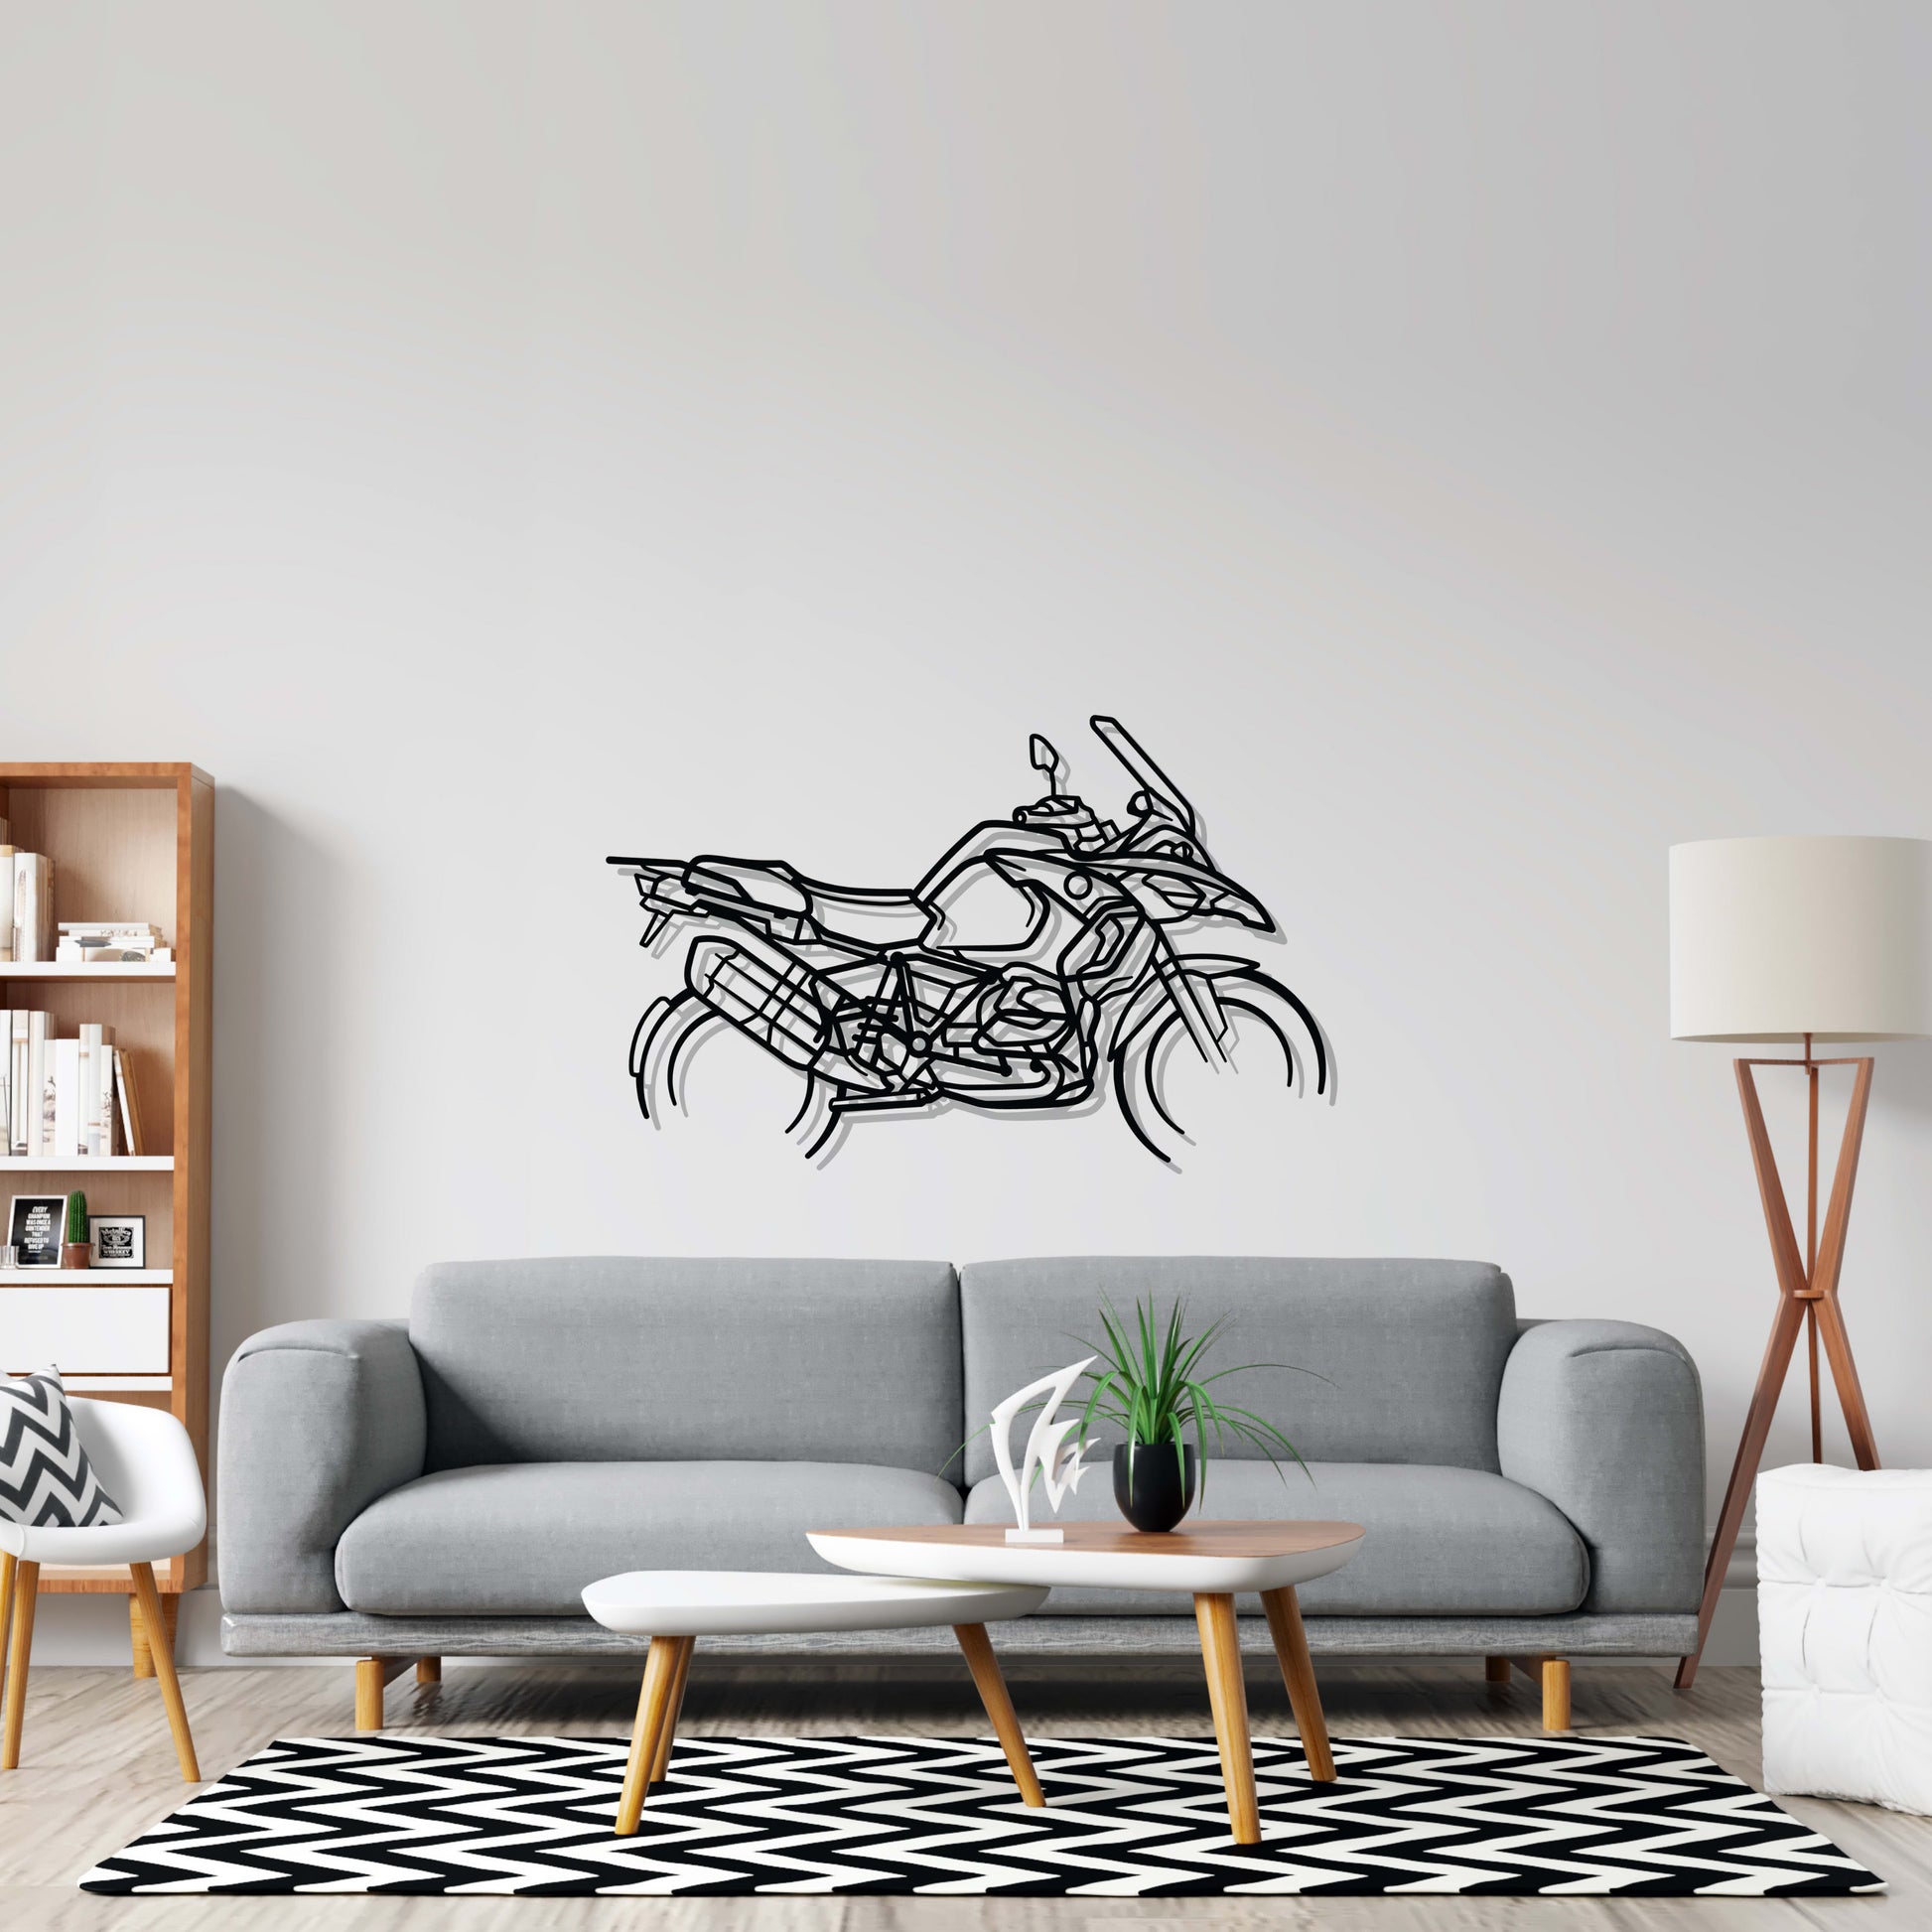 Motorcycle Metal Signs - Metal Motorcycle Wall Art - Metal Signs For Garage - Garage Decorations